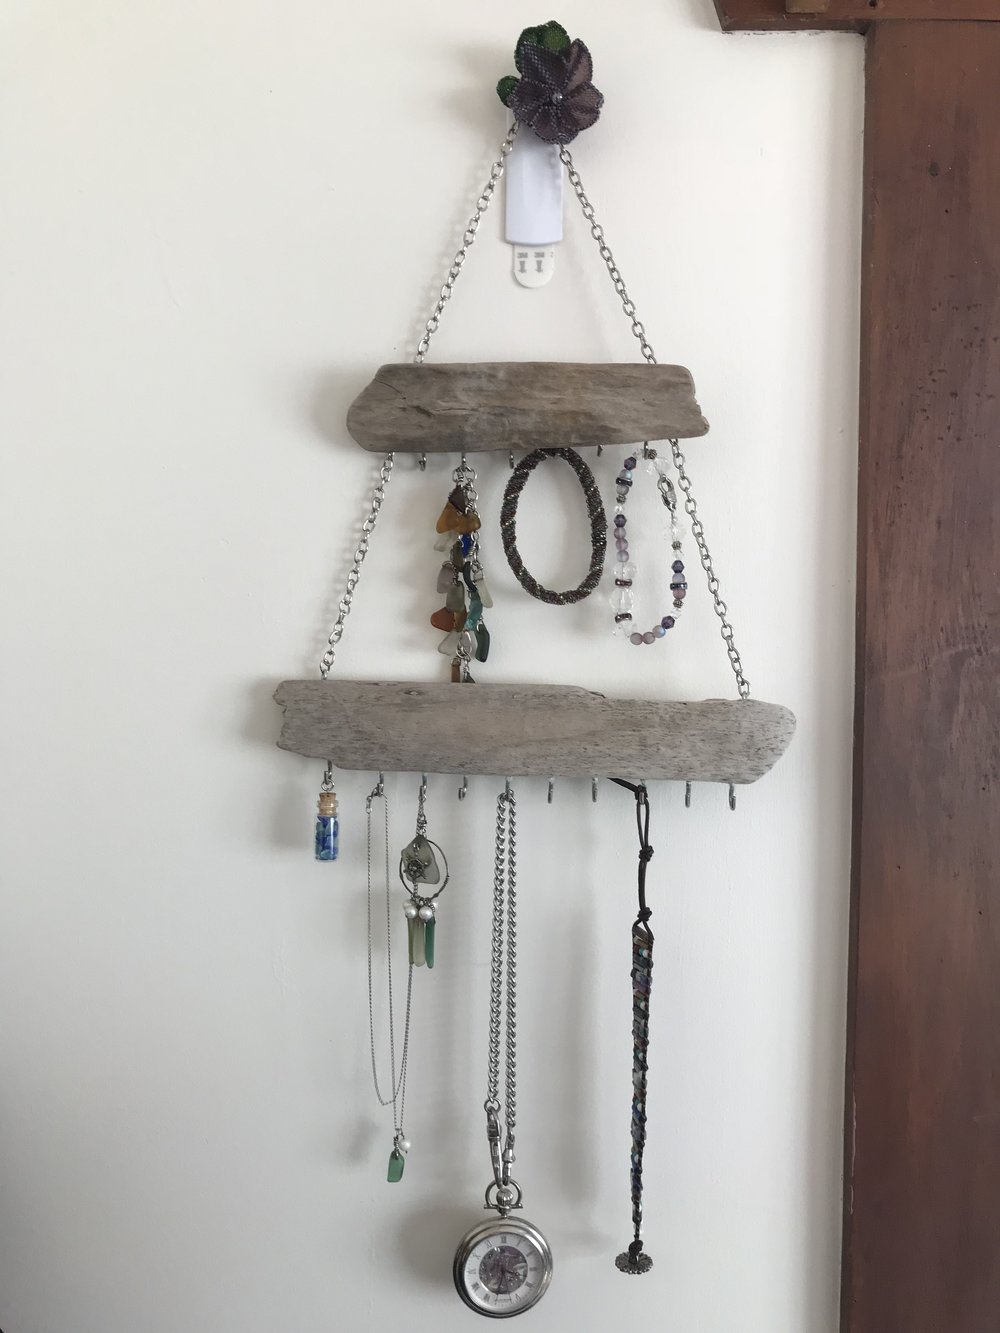 Handmade Driftwood Jewelry Hanger